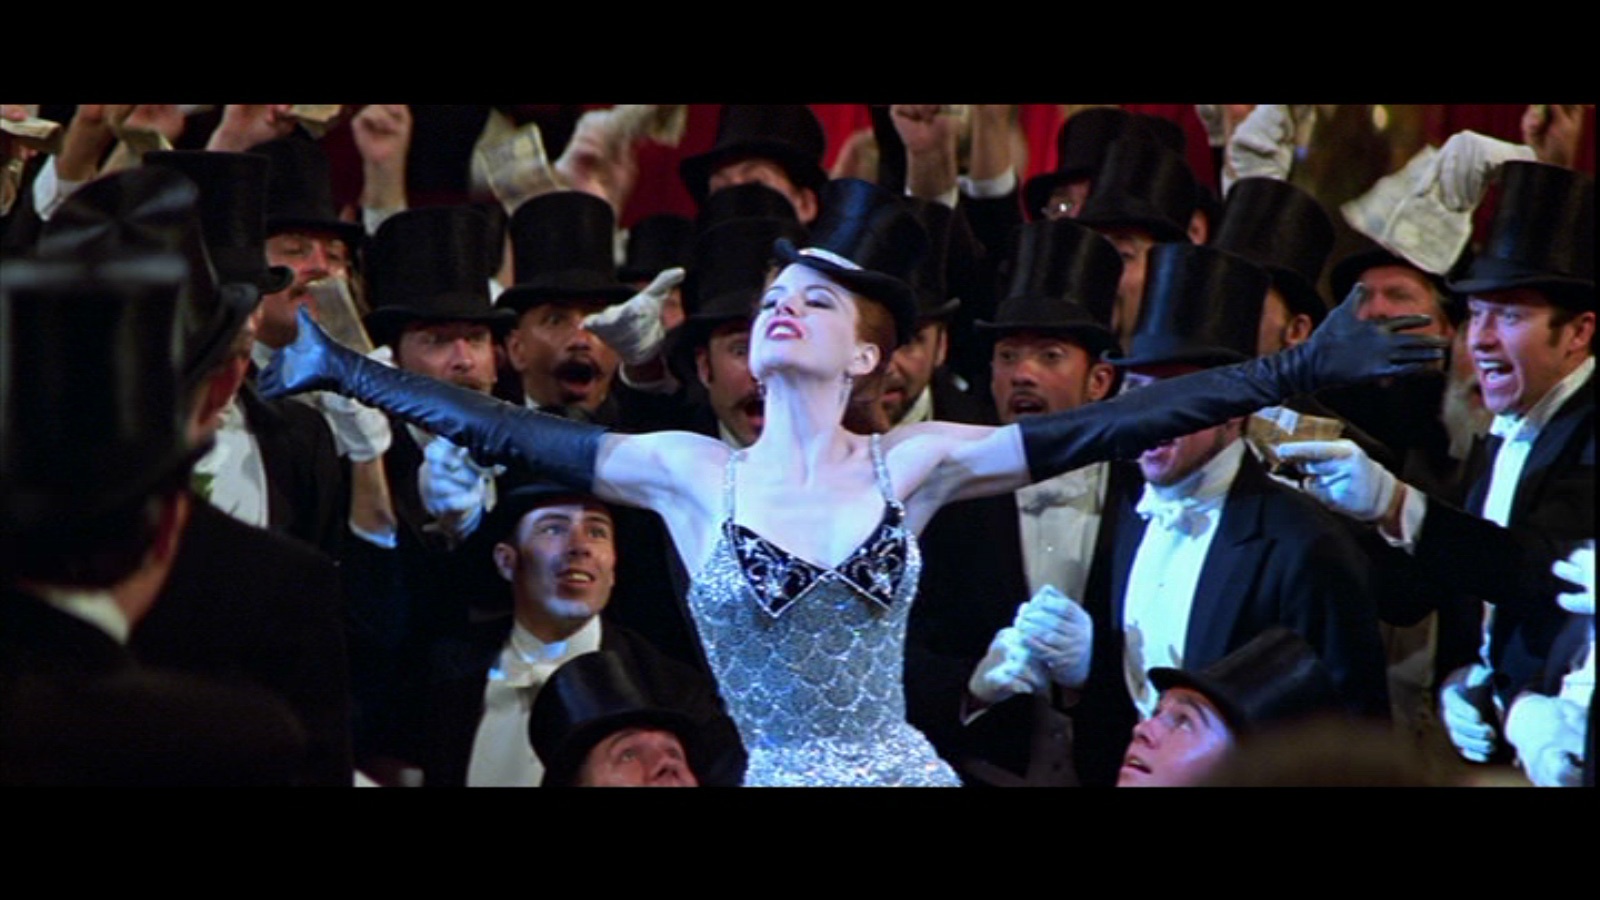 Satine-Moulin-Rouge-female-movie-characters-22920690-1600-900.jpg